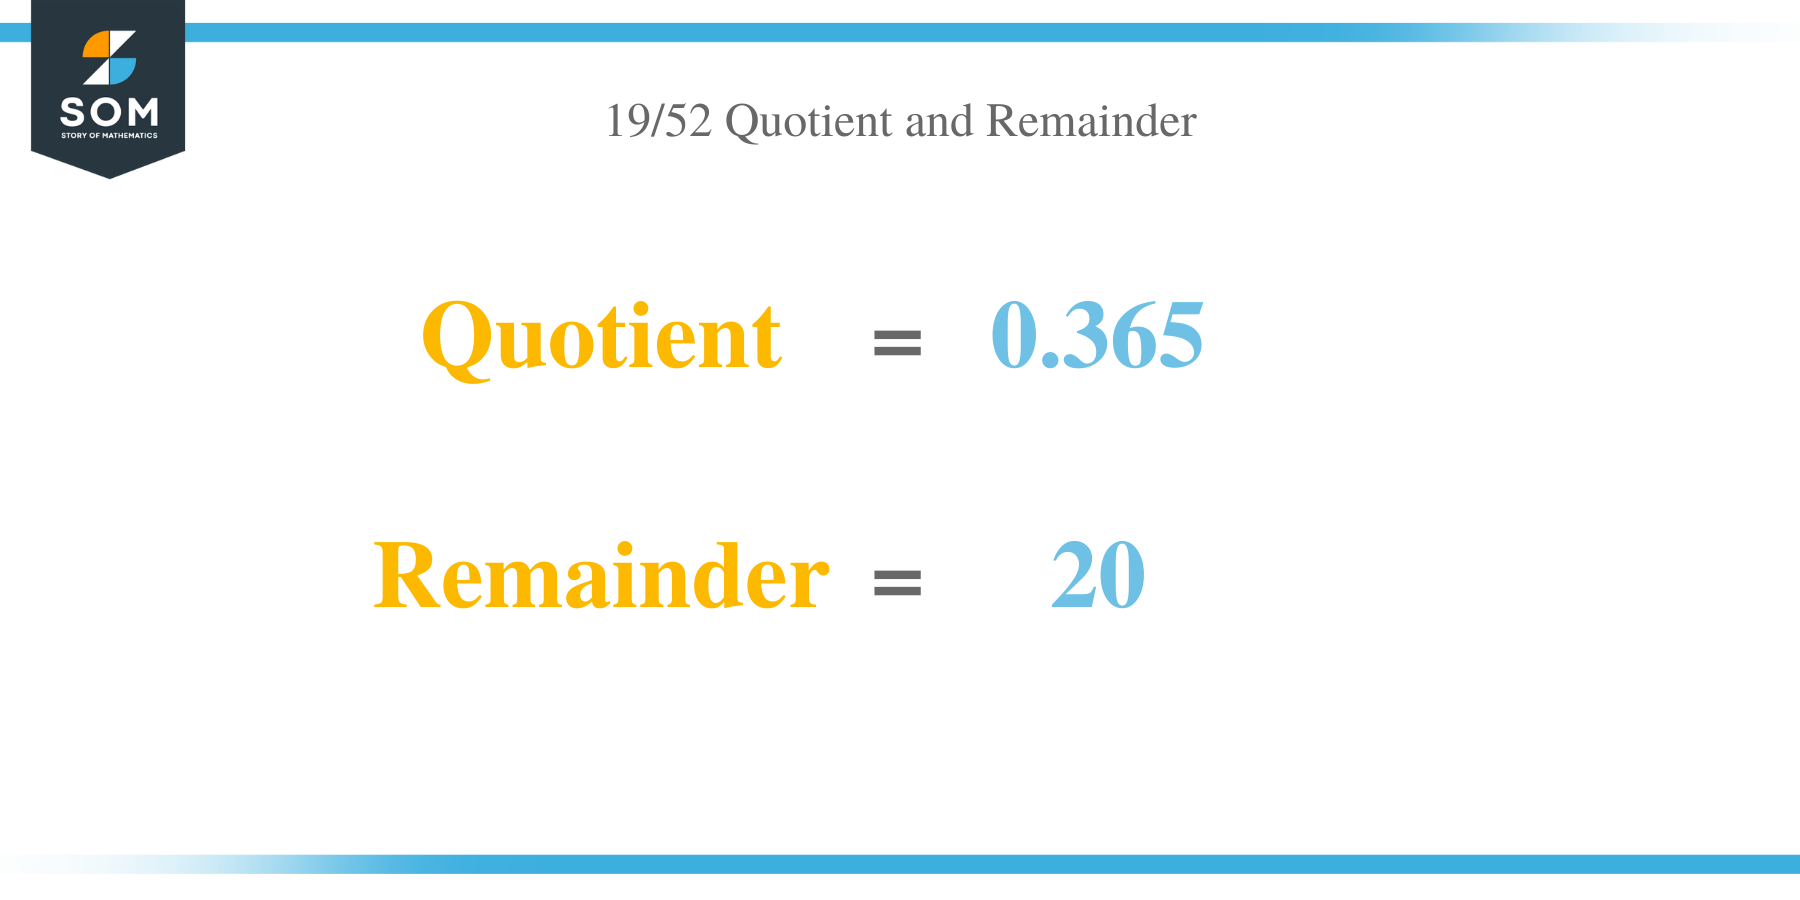 Quotient and Remainder of 19 per 52